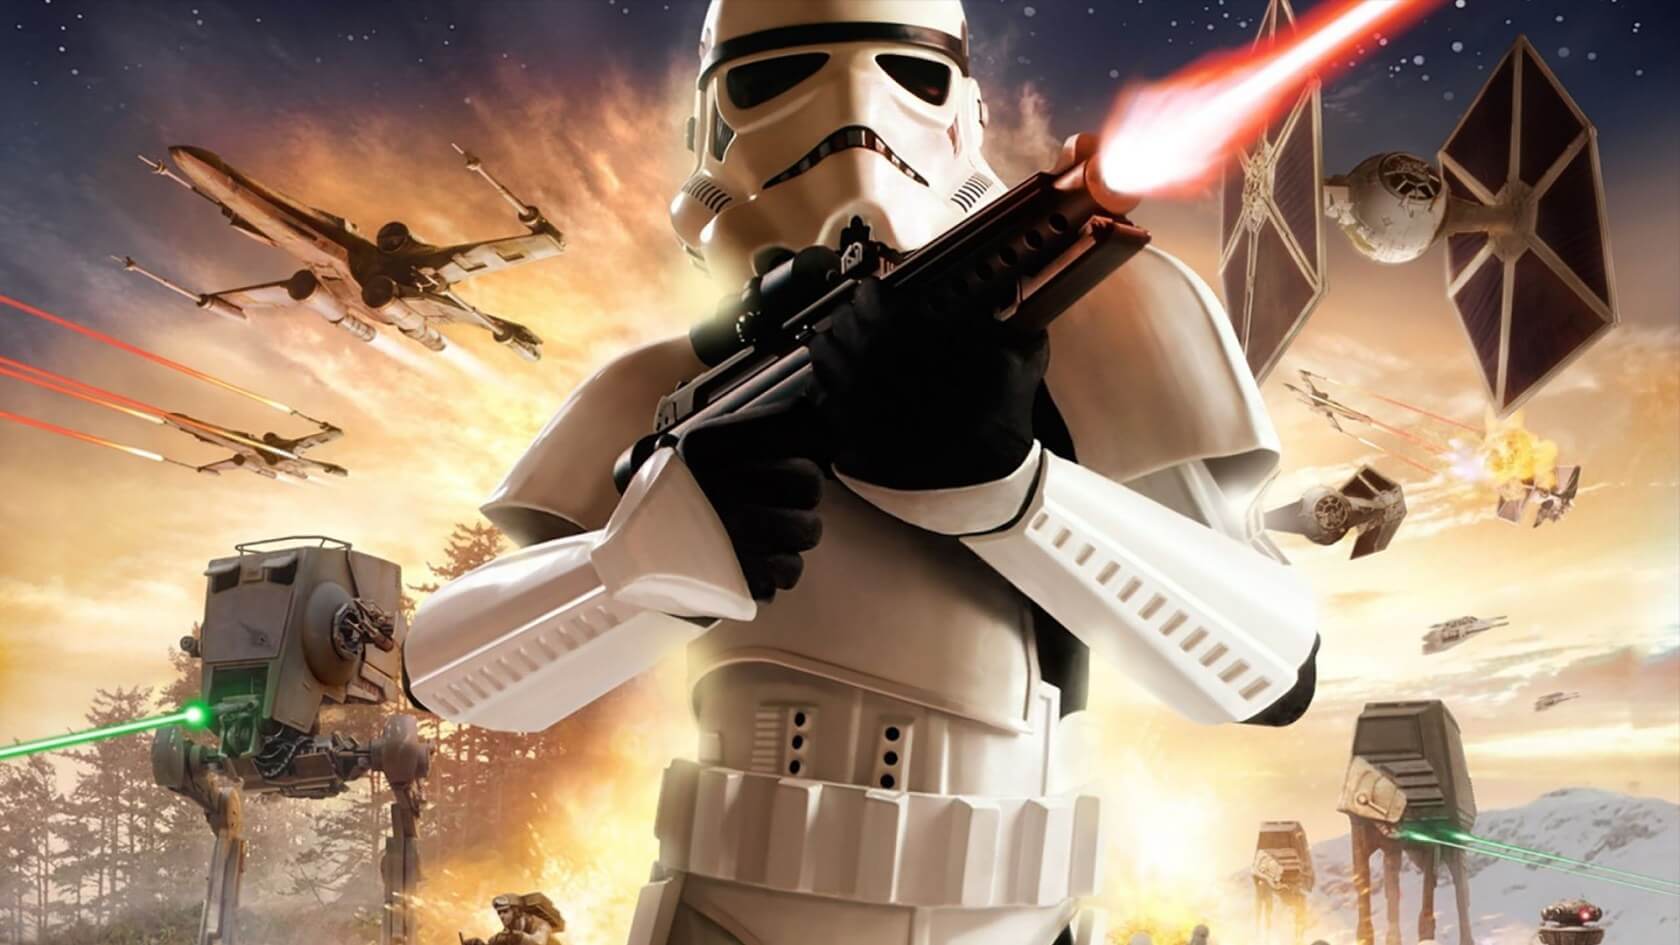 Online multiplayer returns to the original Star Wars: Battlefront via a surprise Steam update